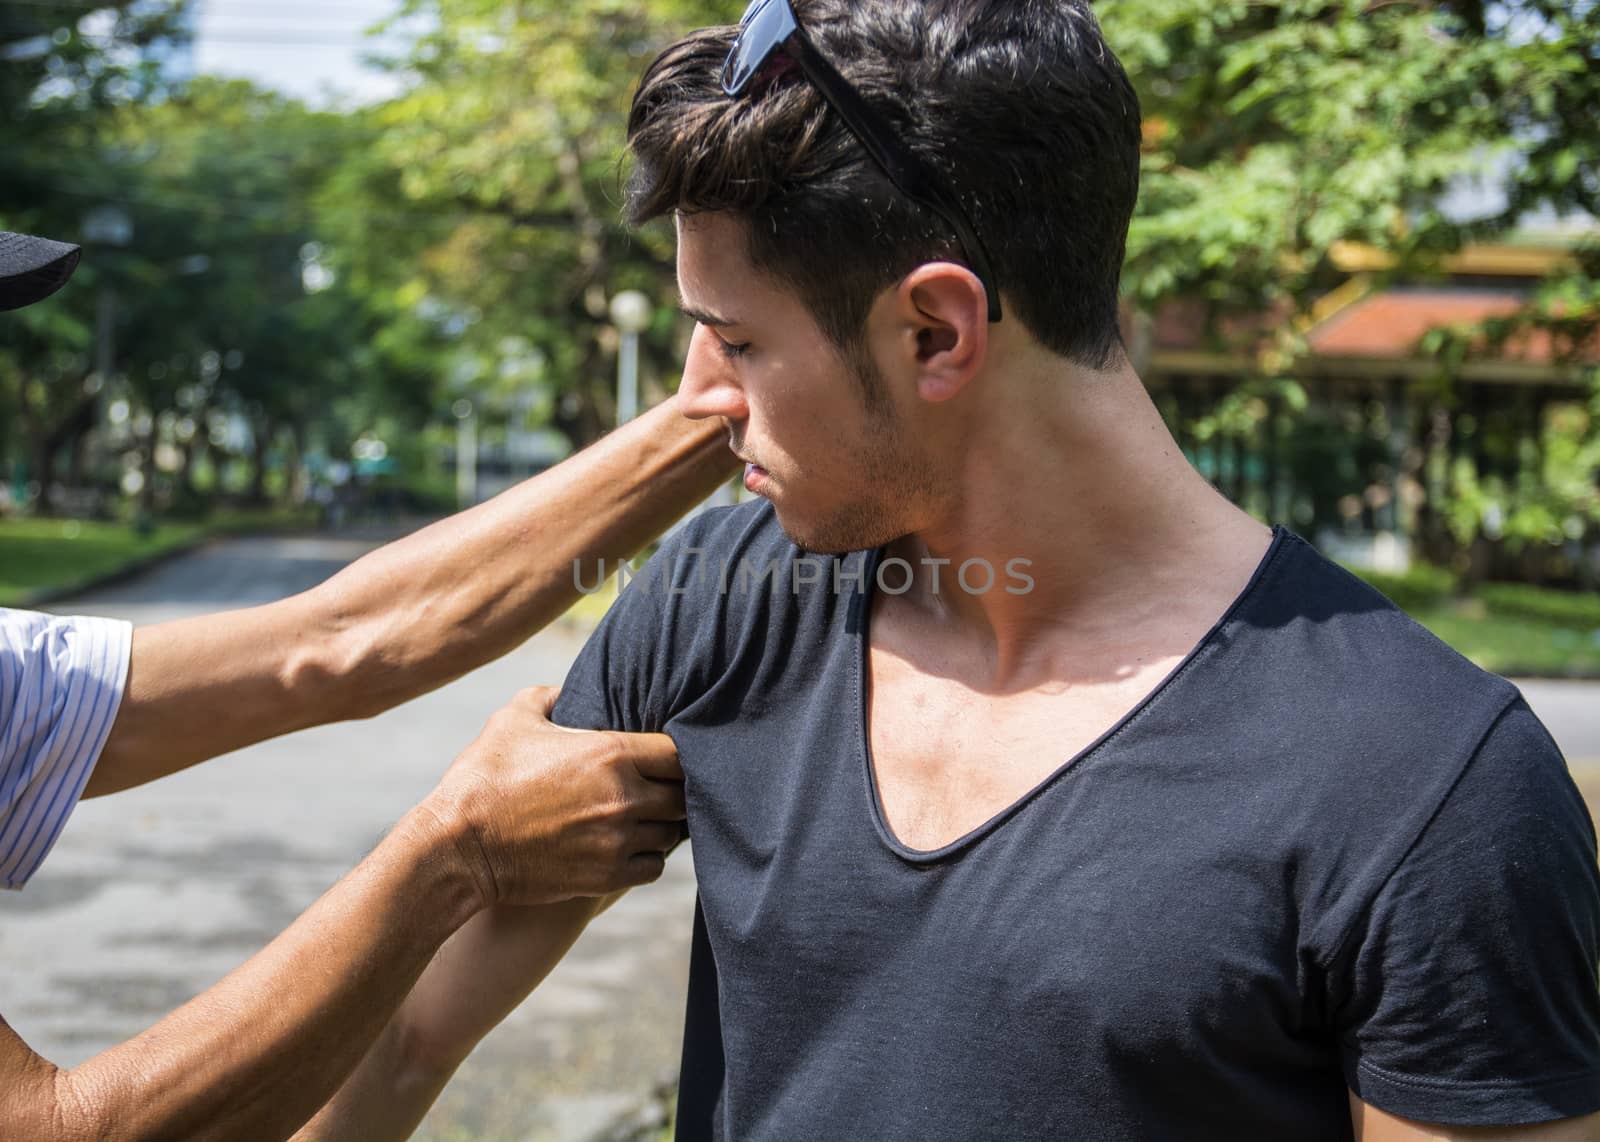 Man receiving massage by artofphoto